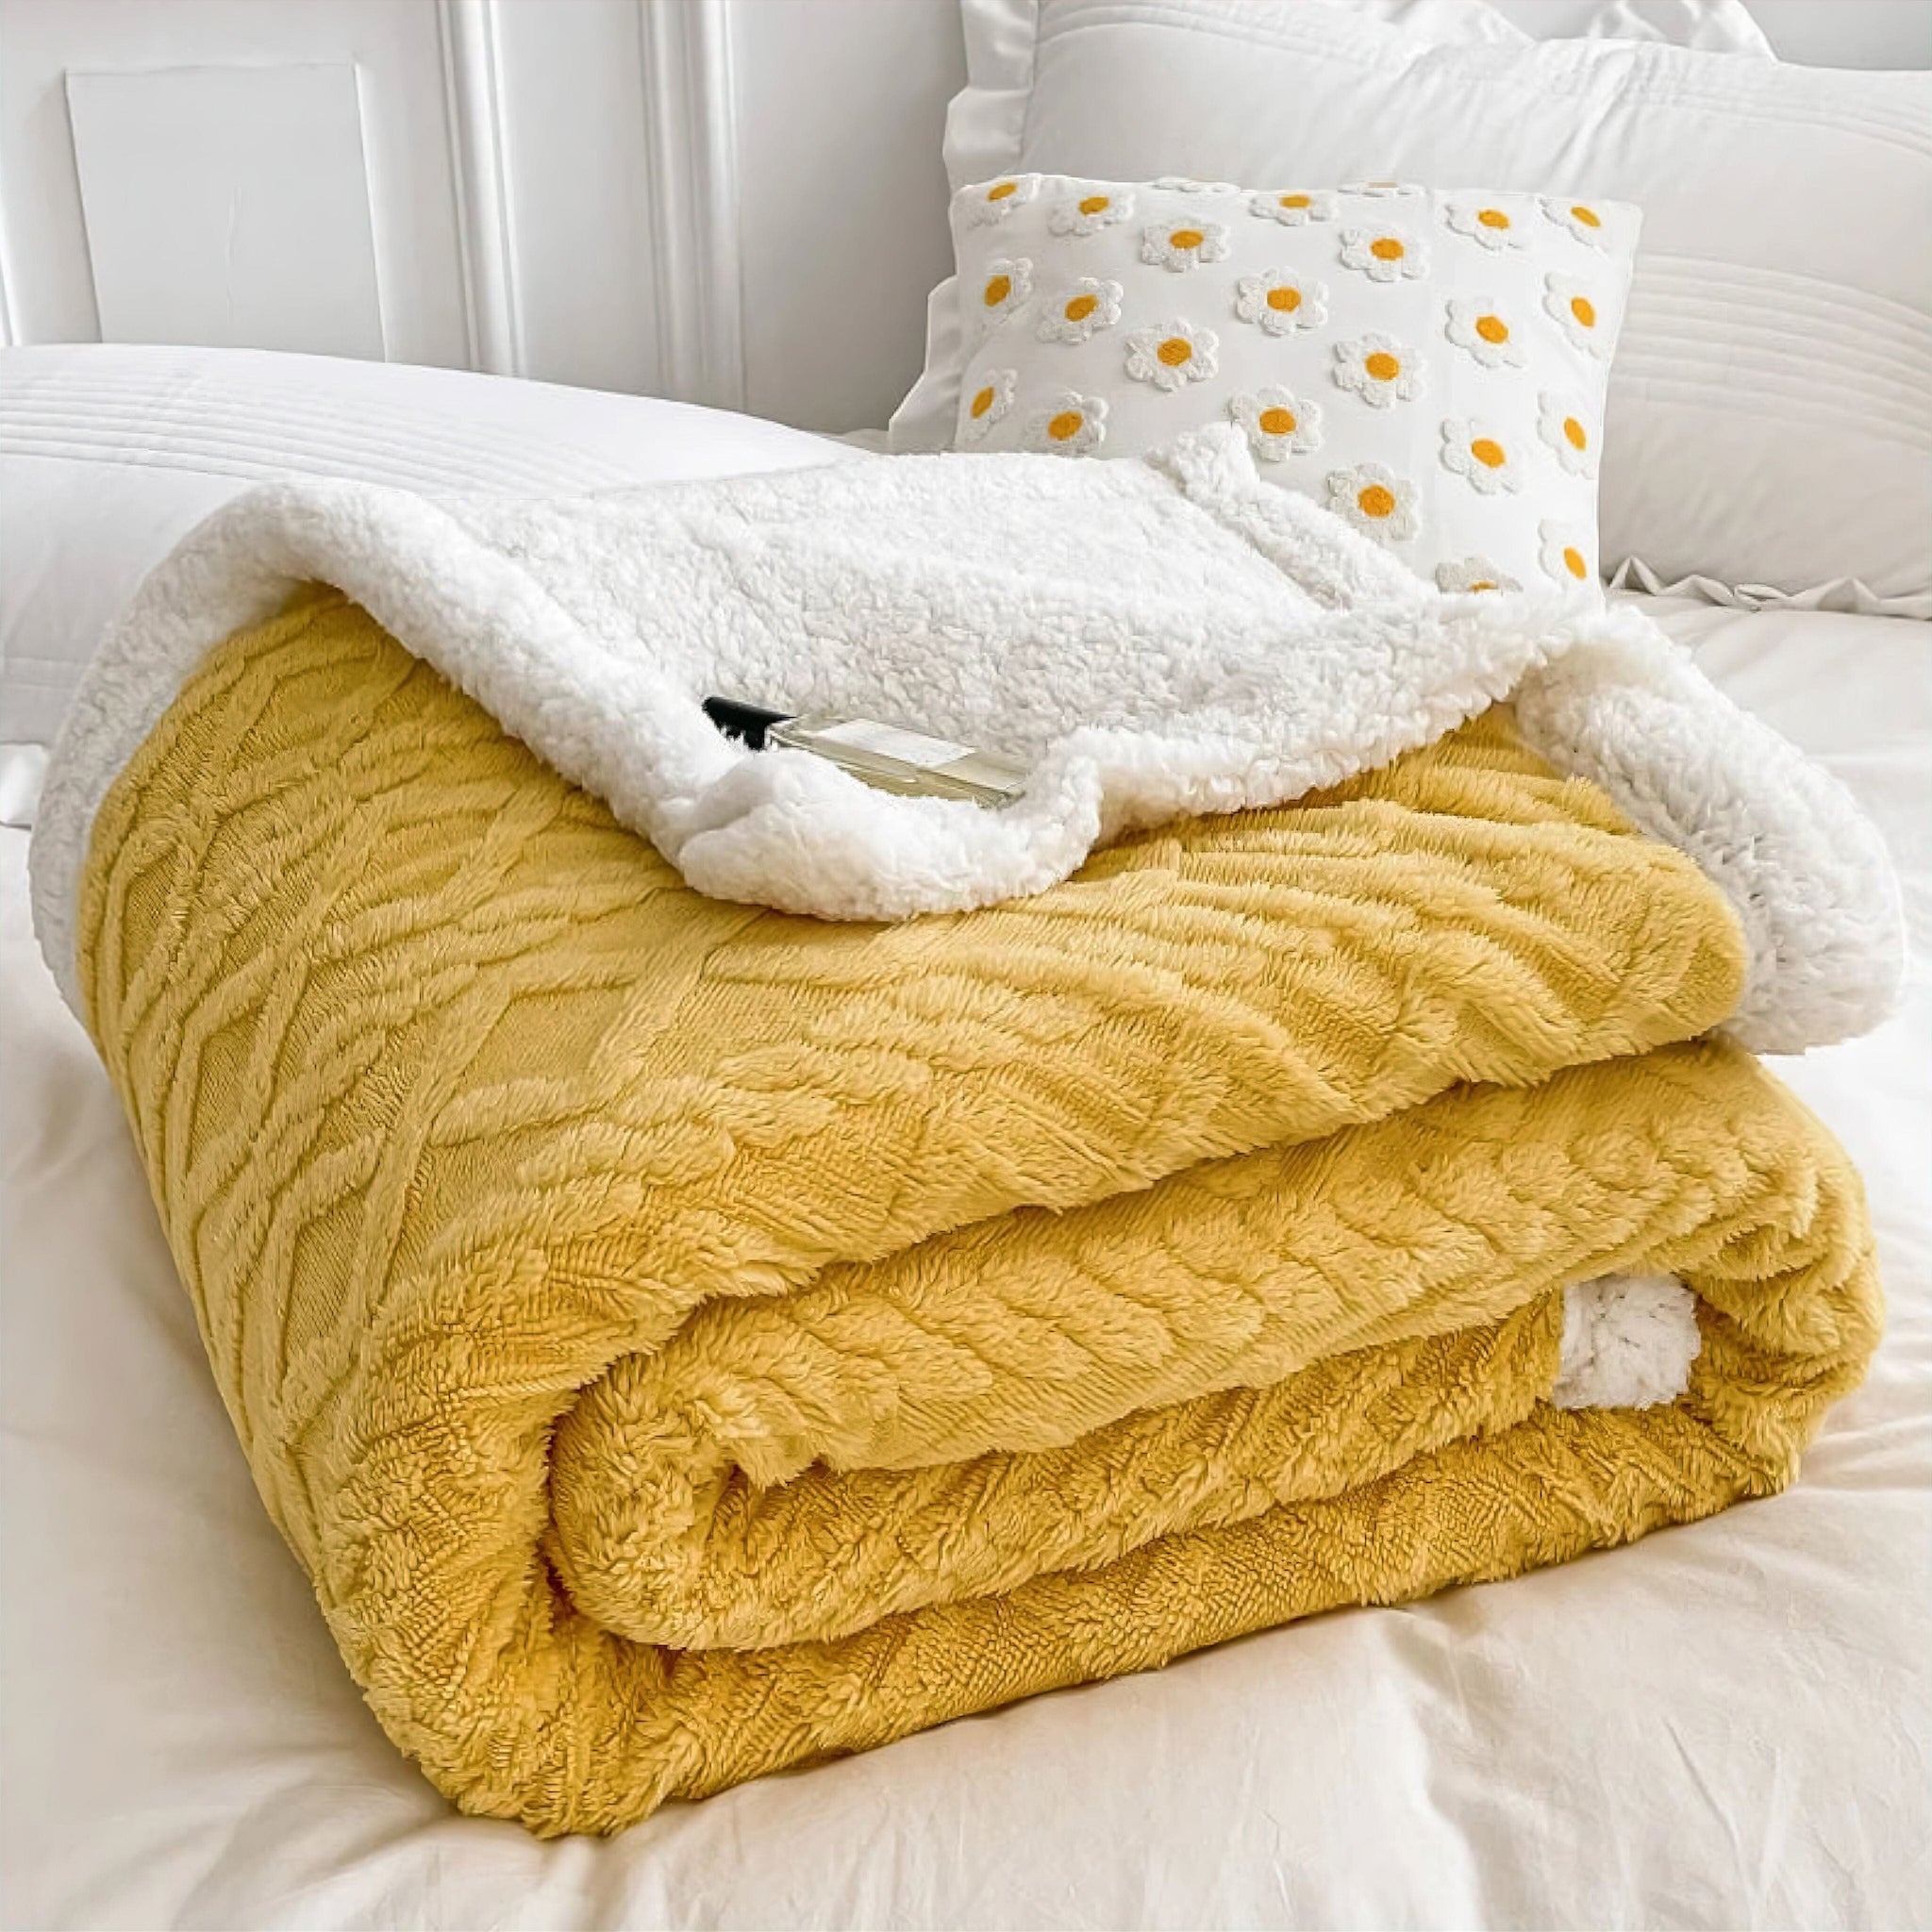 Davide Plaid Blanket Yellow 70 x 100cm 